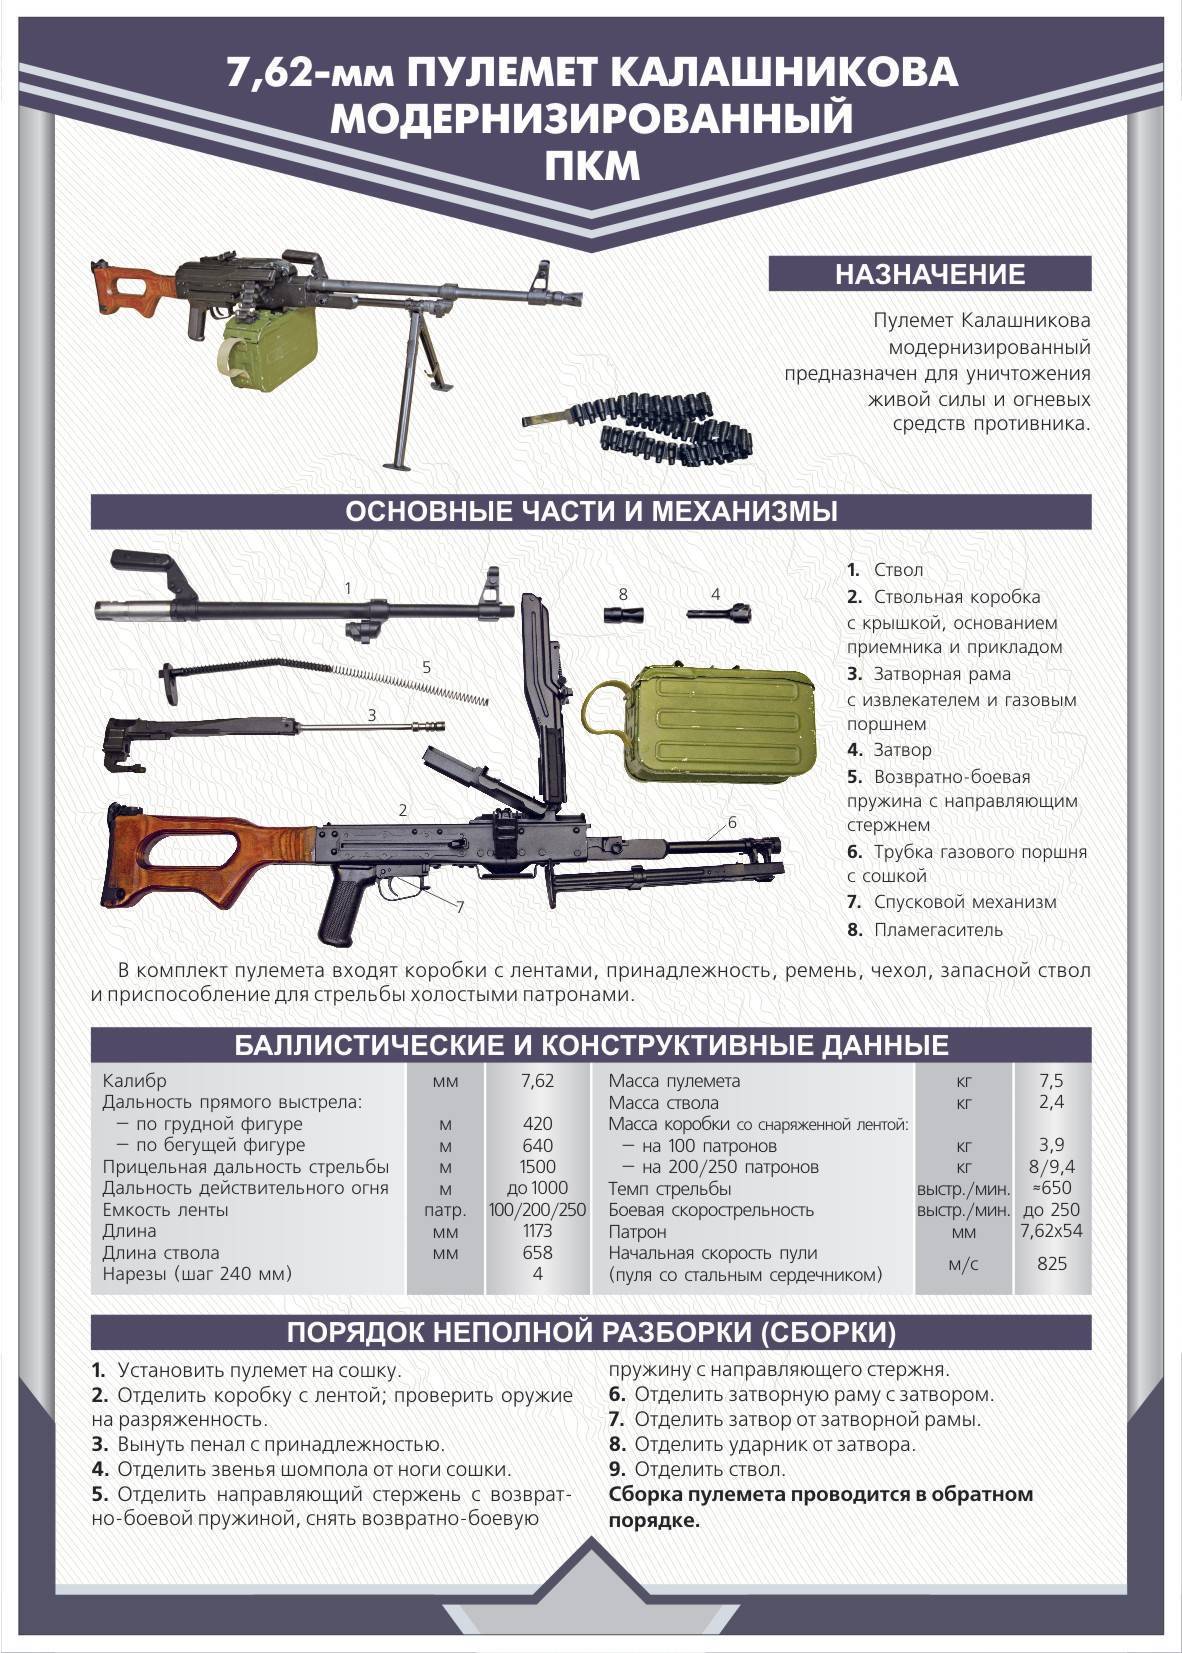 Рпк-16: характеристики и фото ручного пулемета